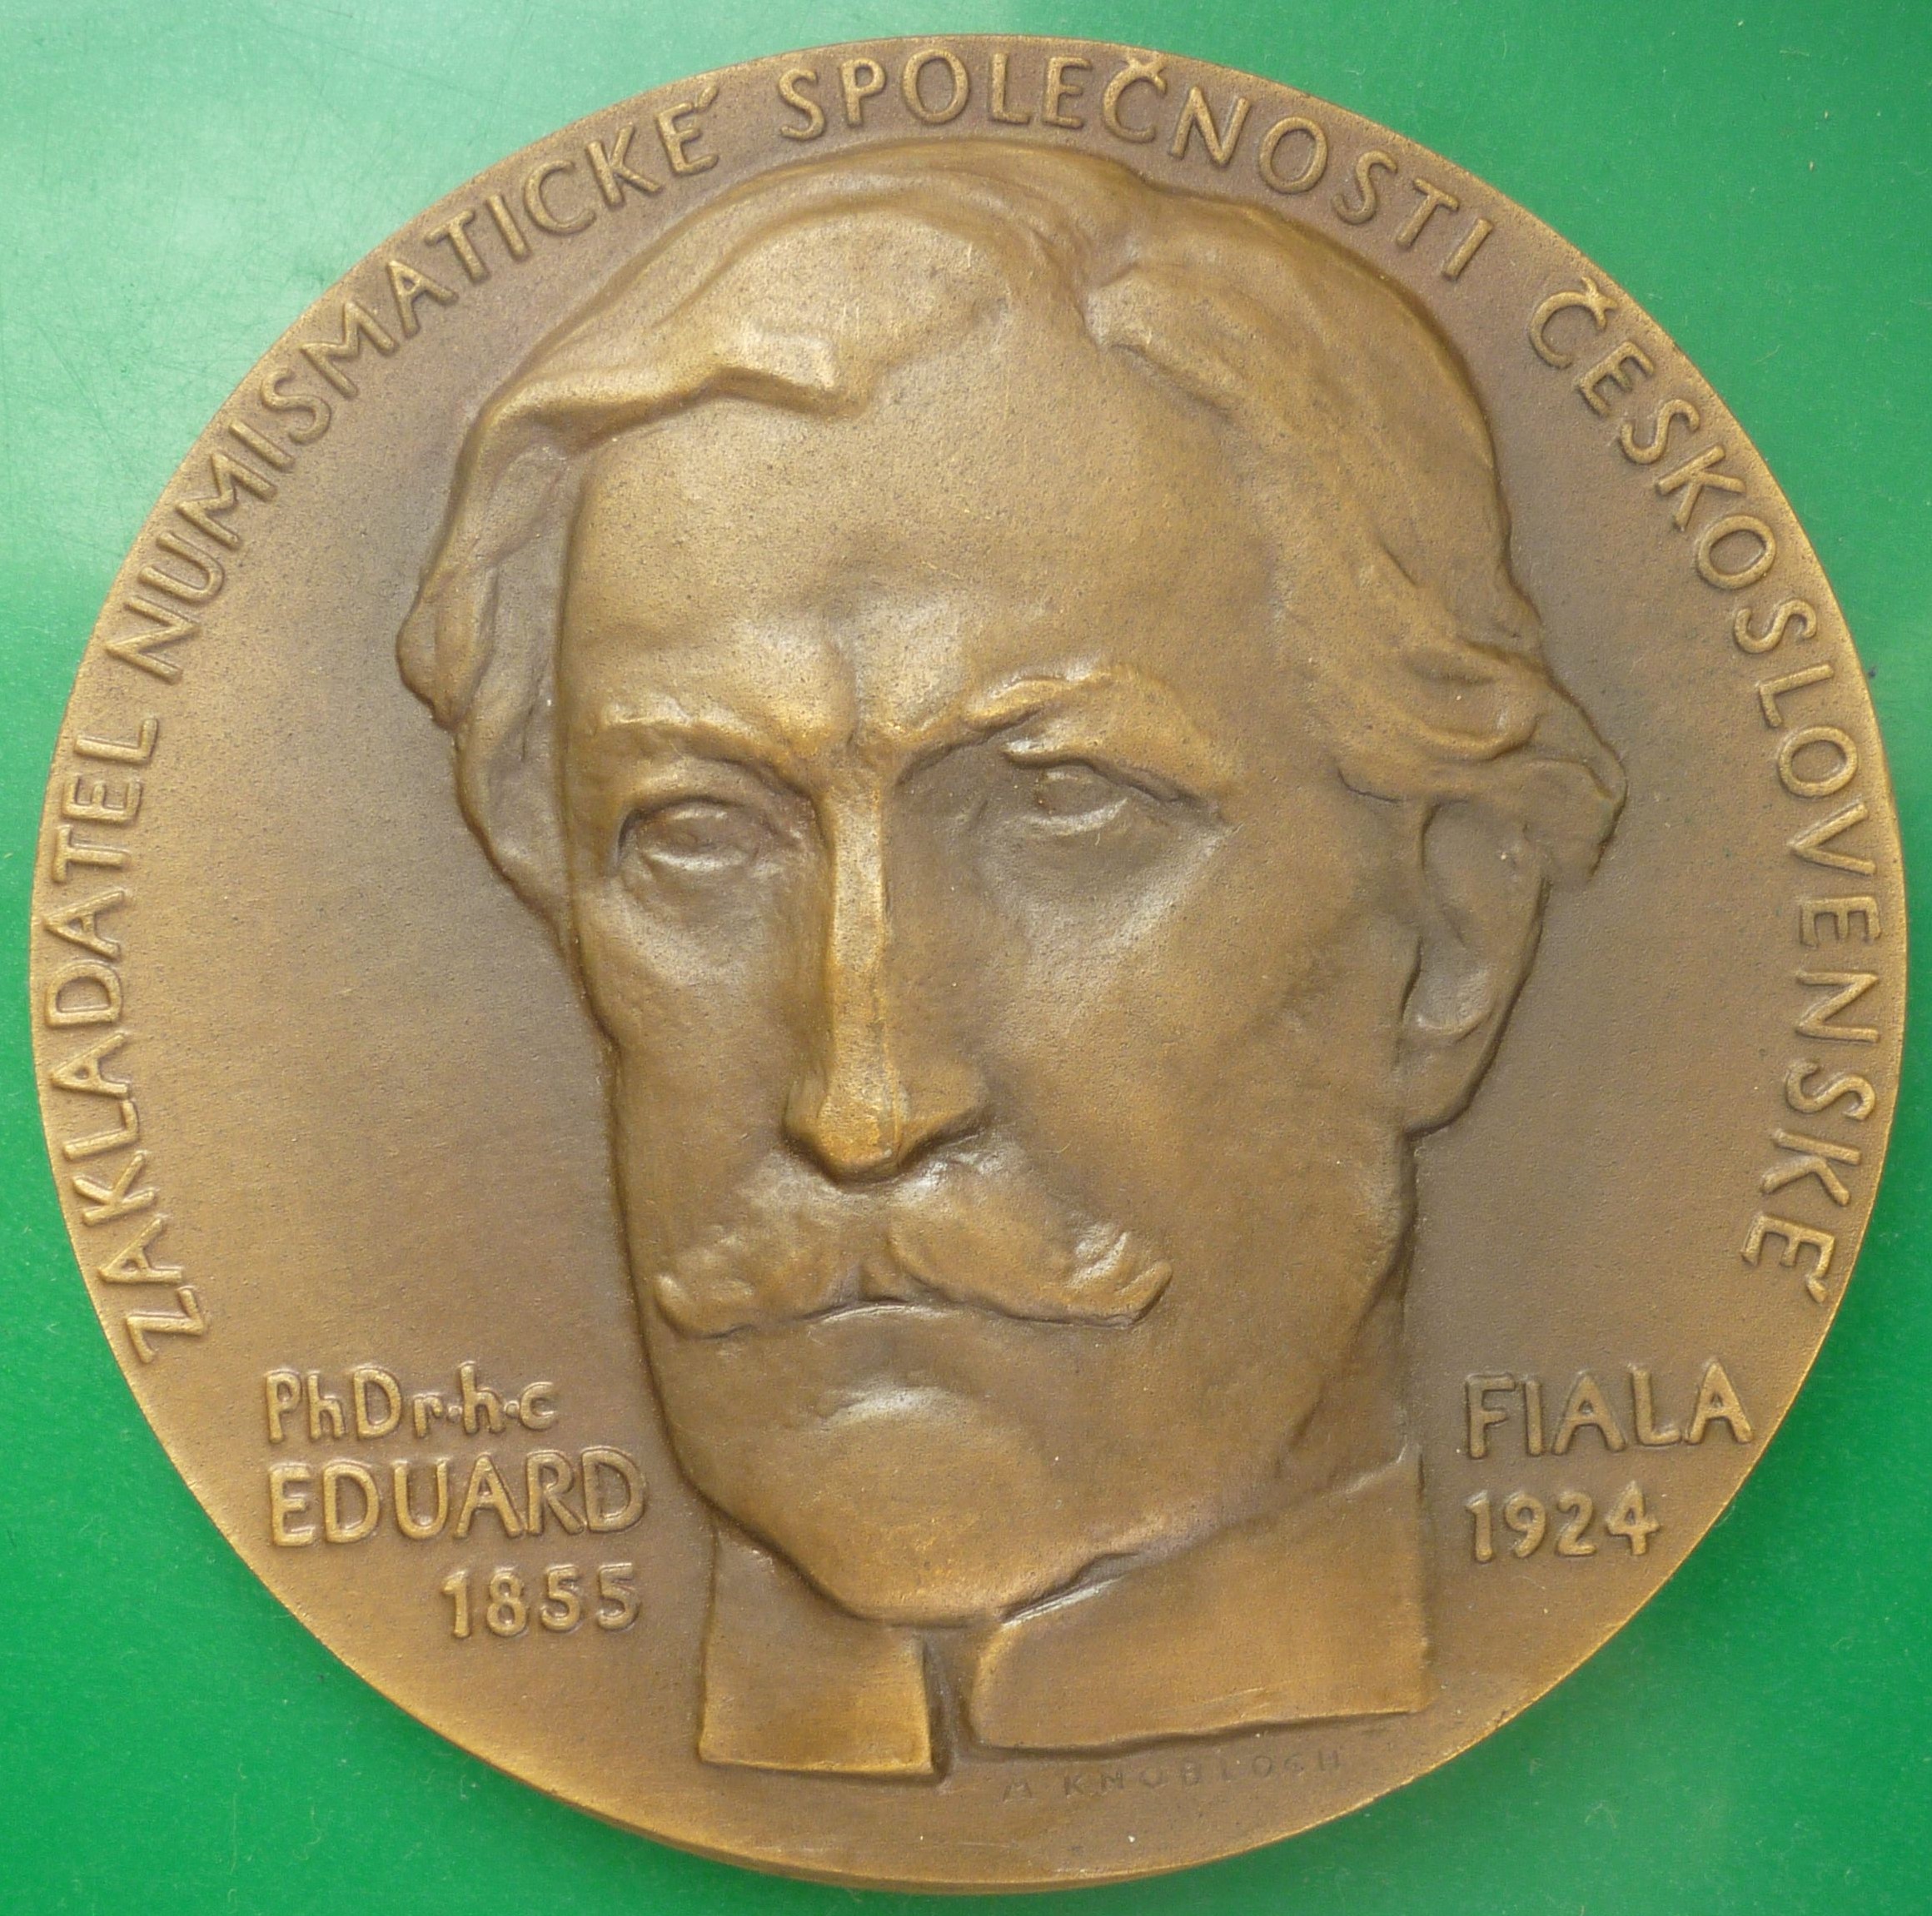 Medaile zakladatele ČNS Eduarda Fialy